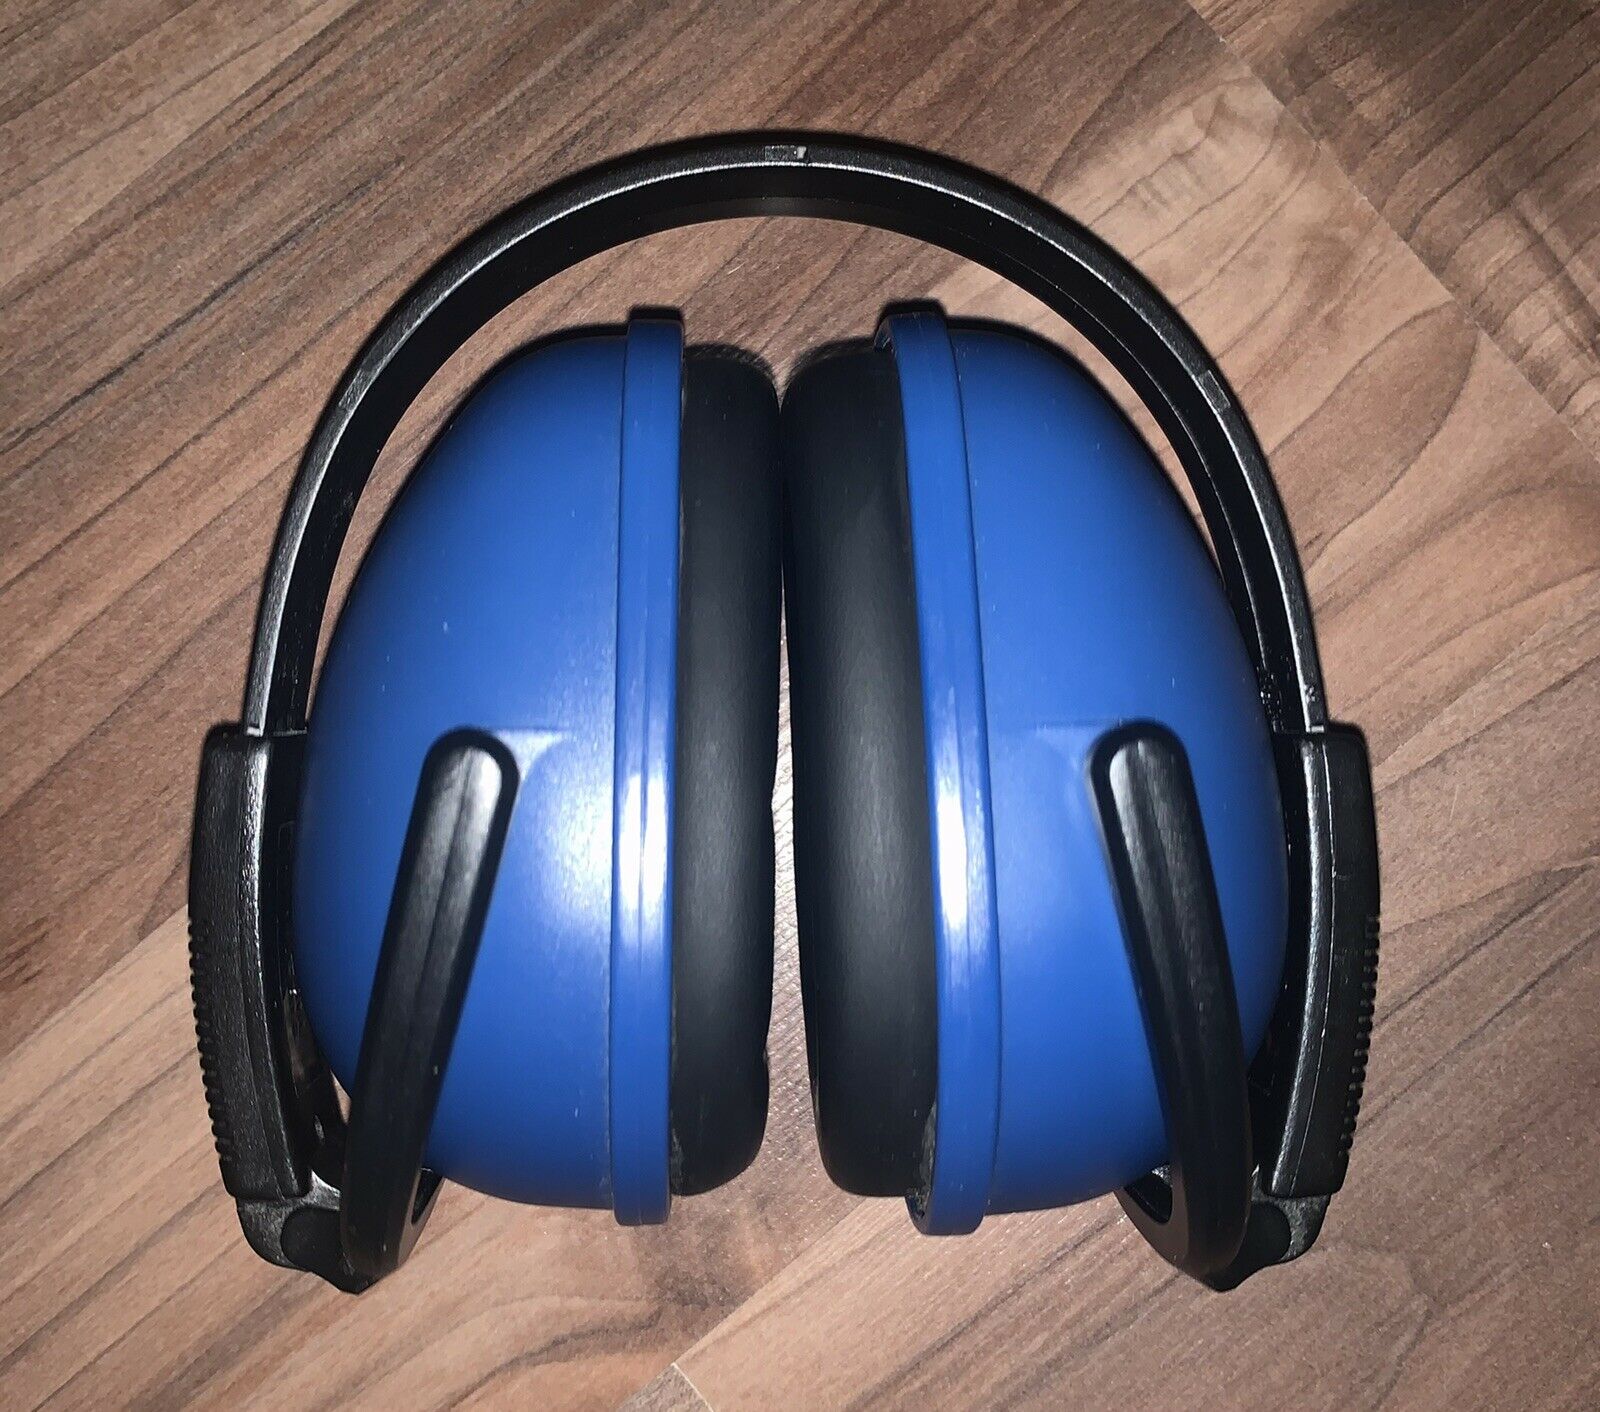 3m Earmuff Noise Reduction Ear Protection 23db Adjustable 90559